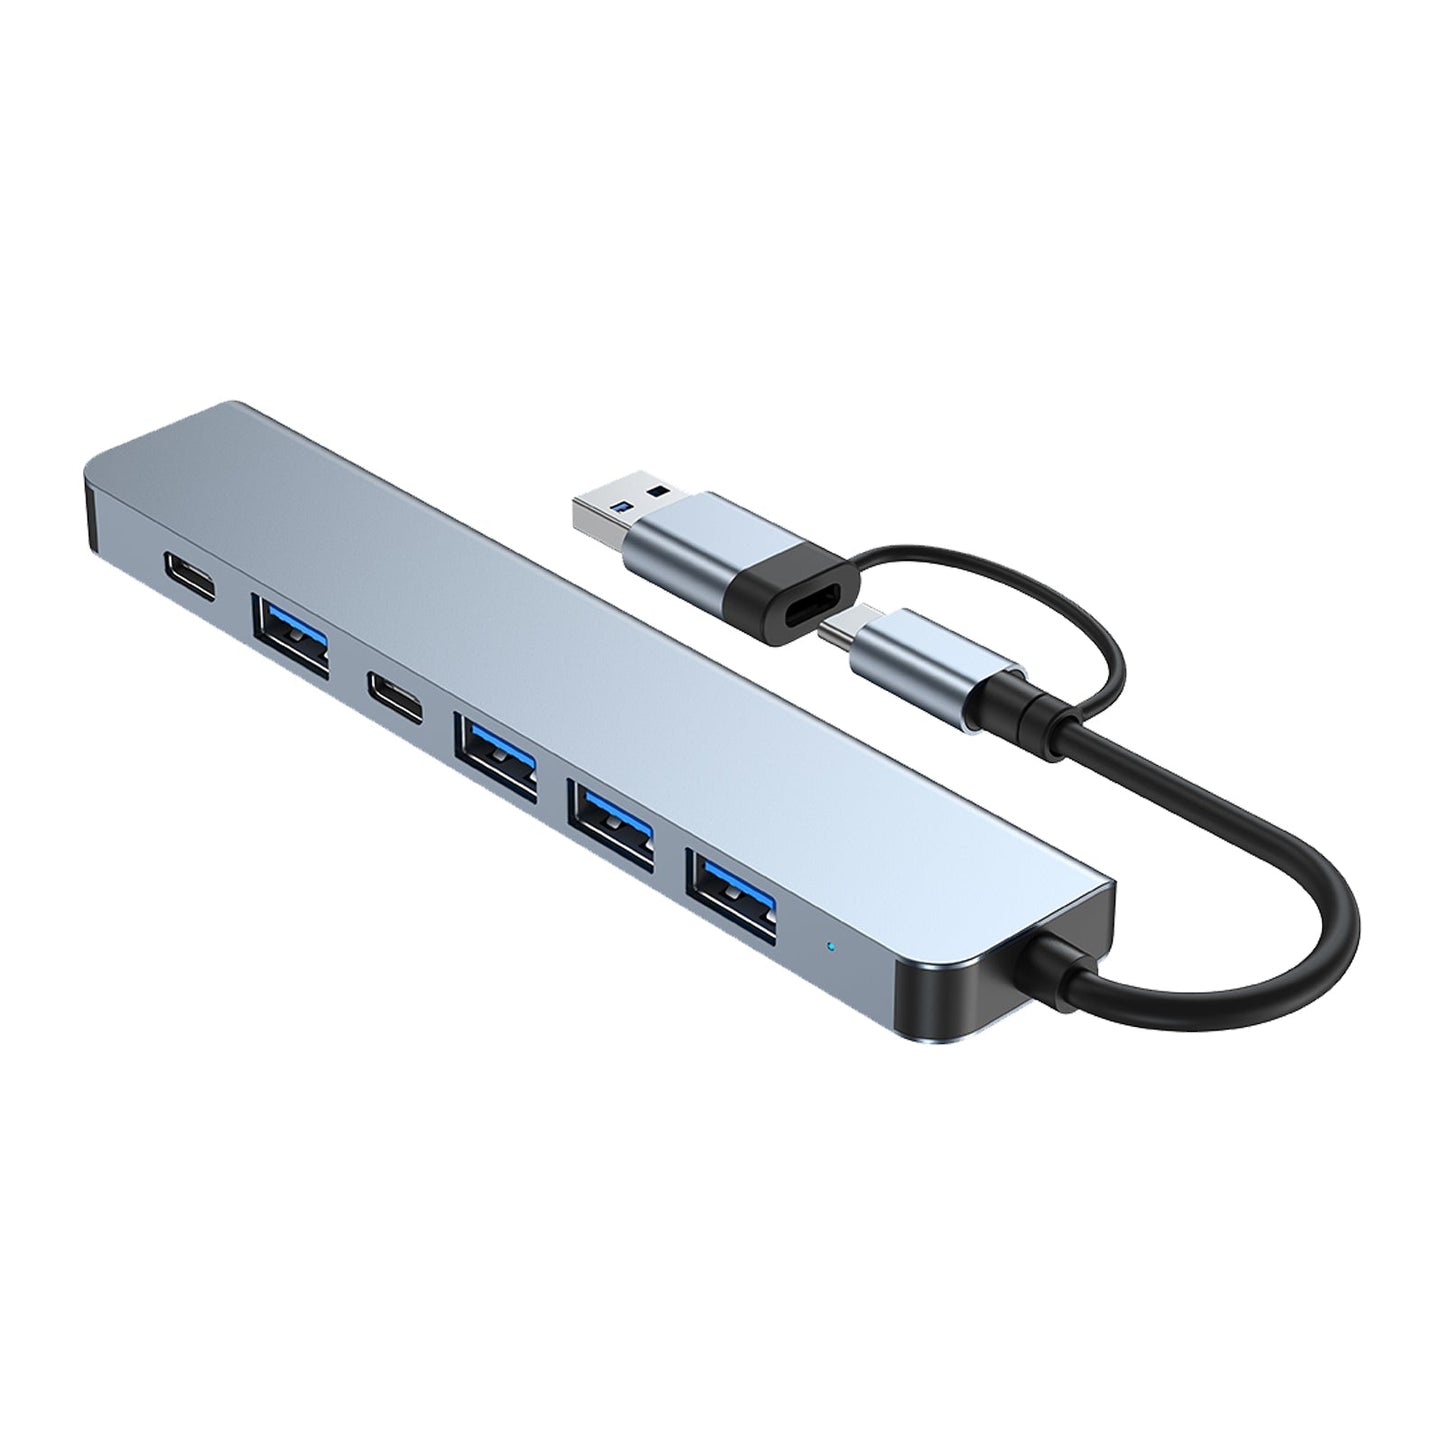 USB+Typ C Dual -Schnittstelle 7 in 1 USBC Hub Adapter Dock USB3.0+USB 2.0*2+SD+TF